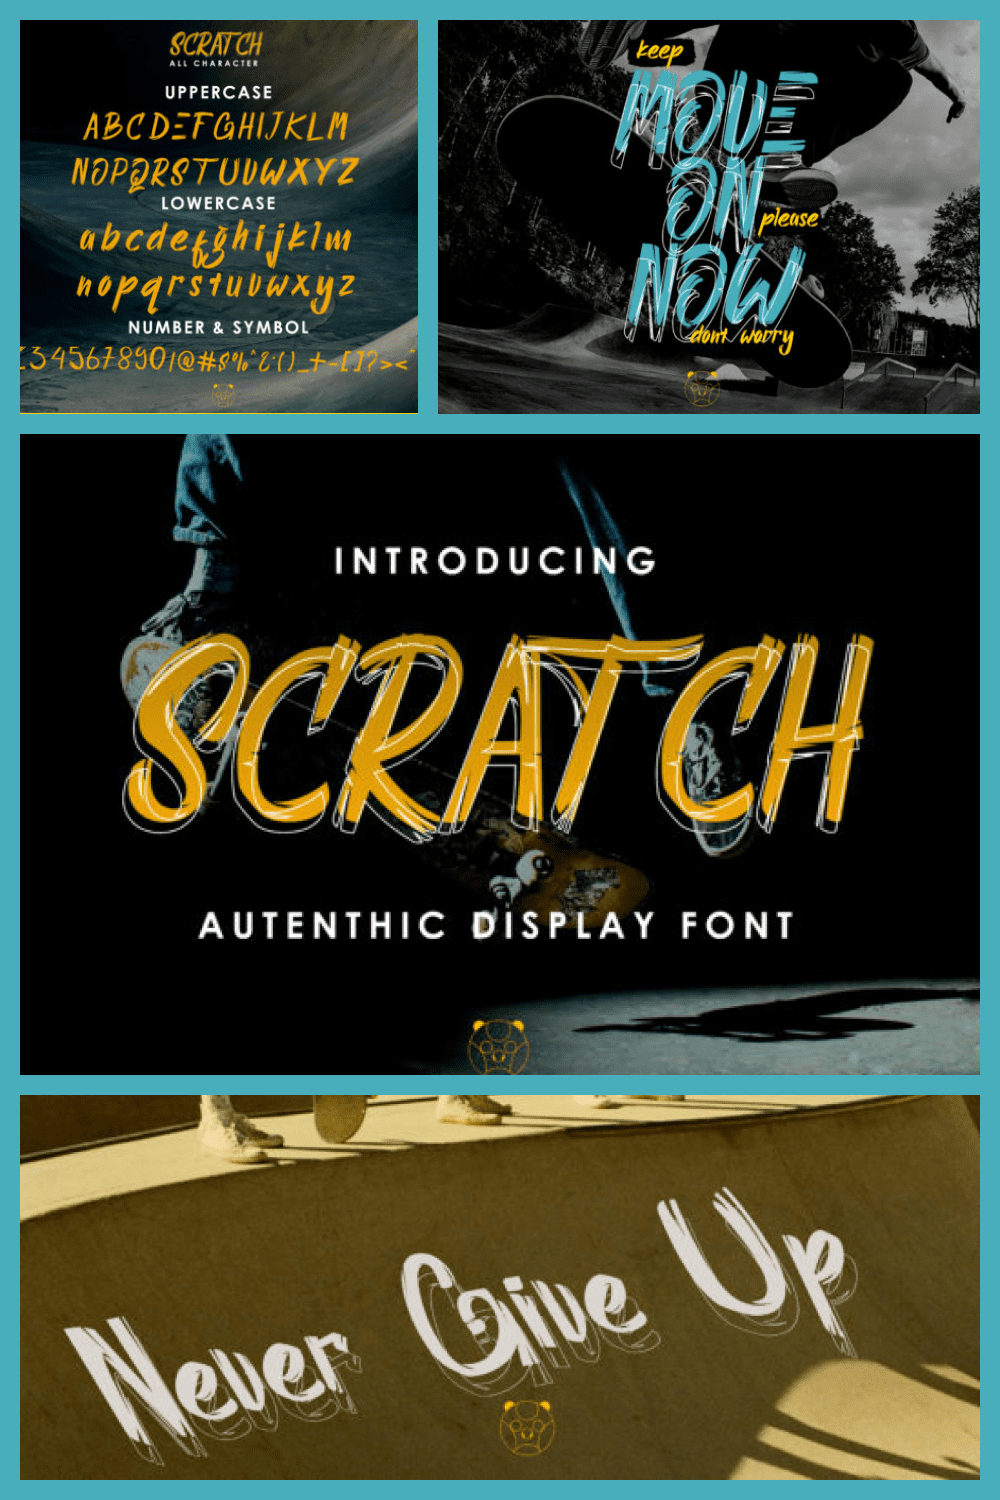 Scratch Display Font - MasterBundles - Pinterest Collage Image.